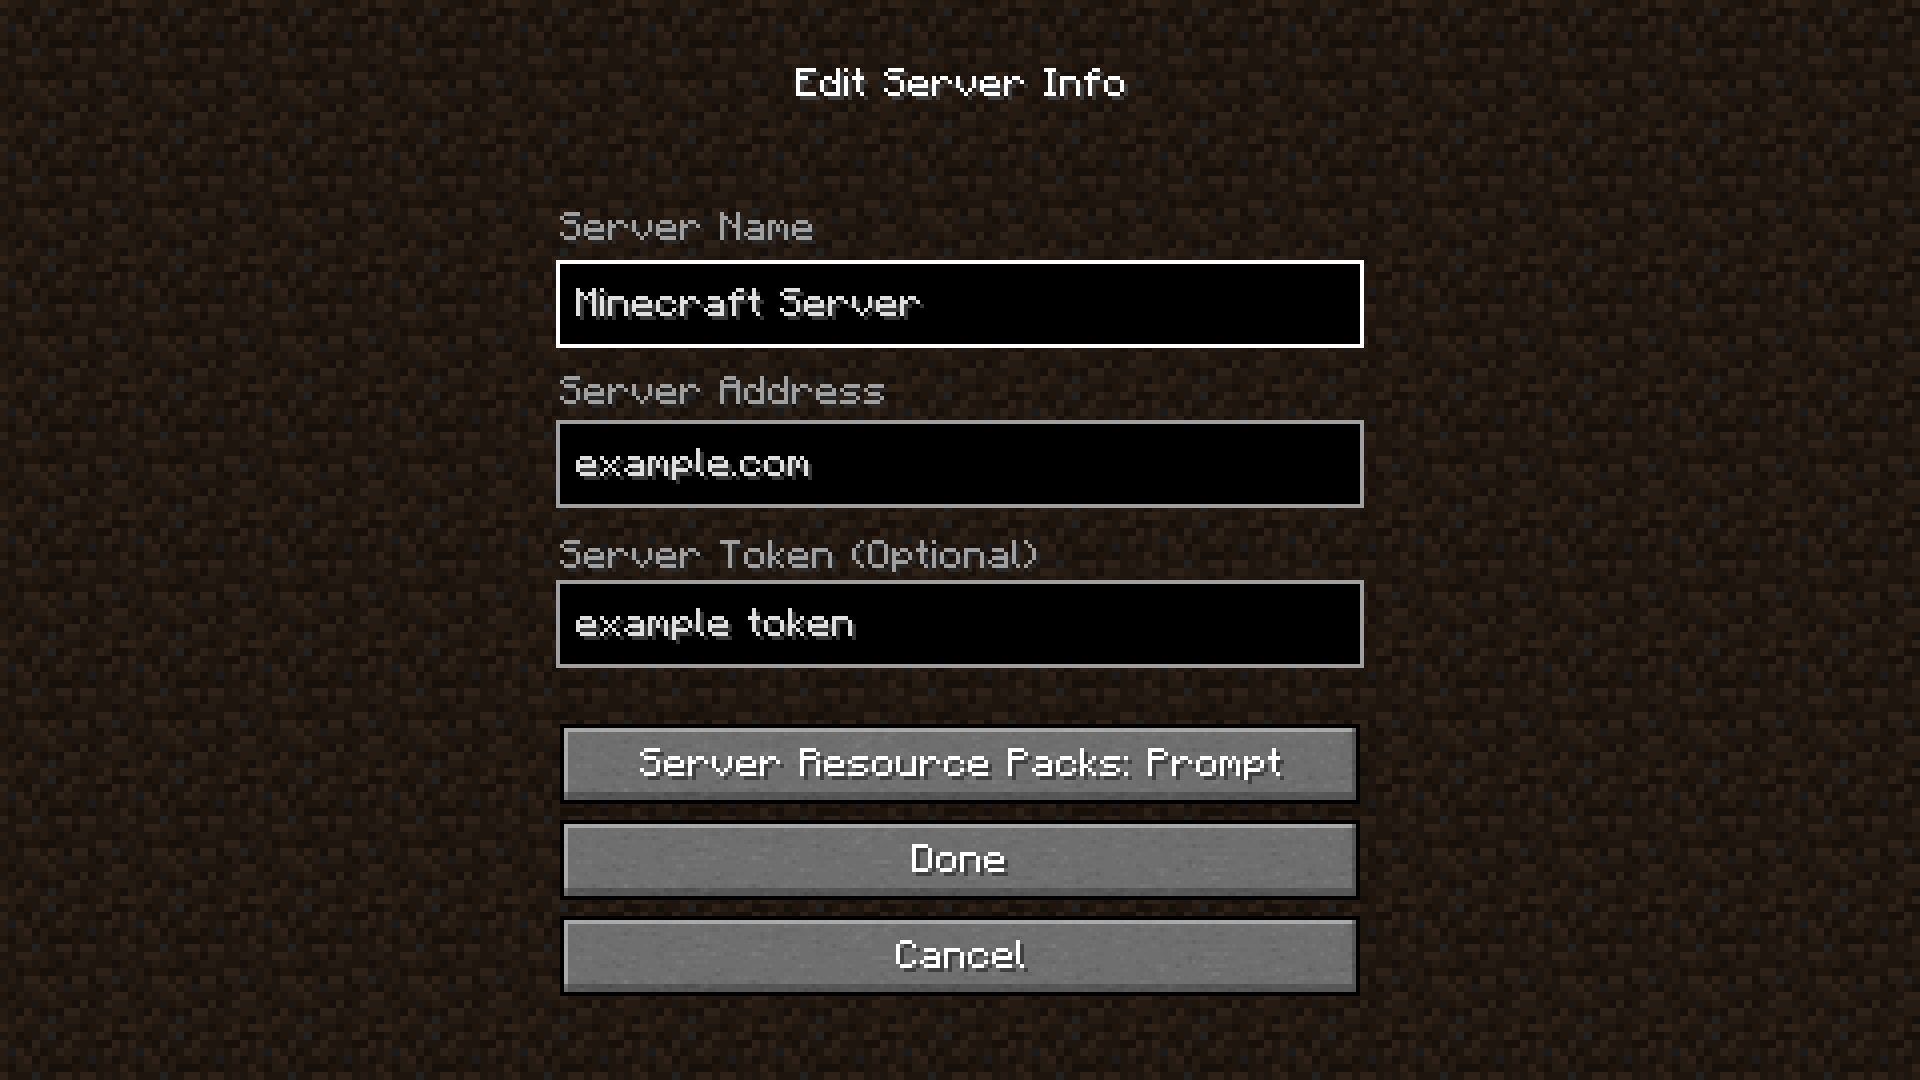 Adding or editing server